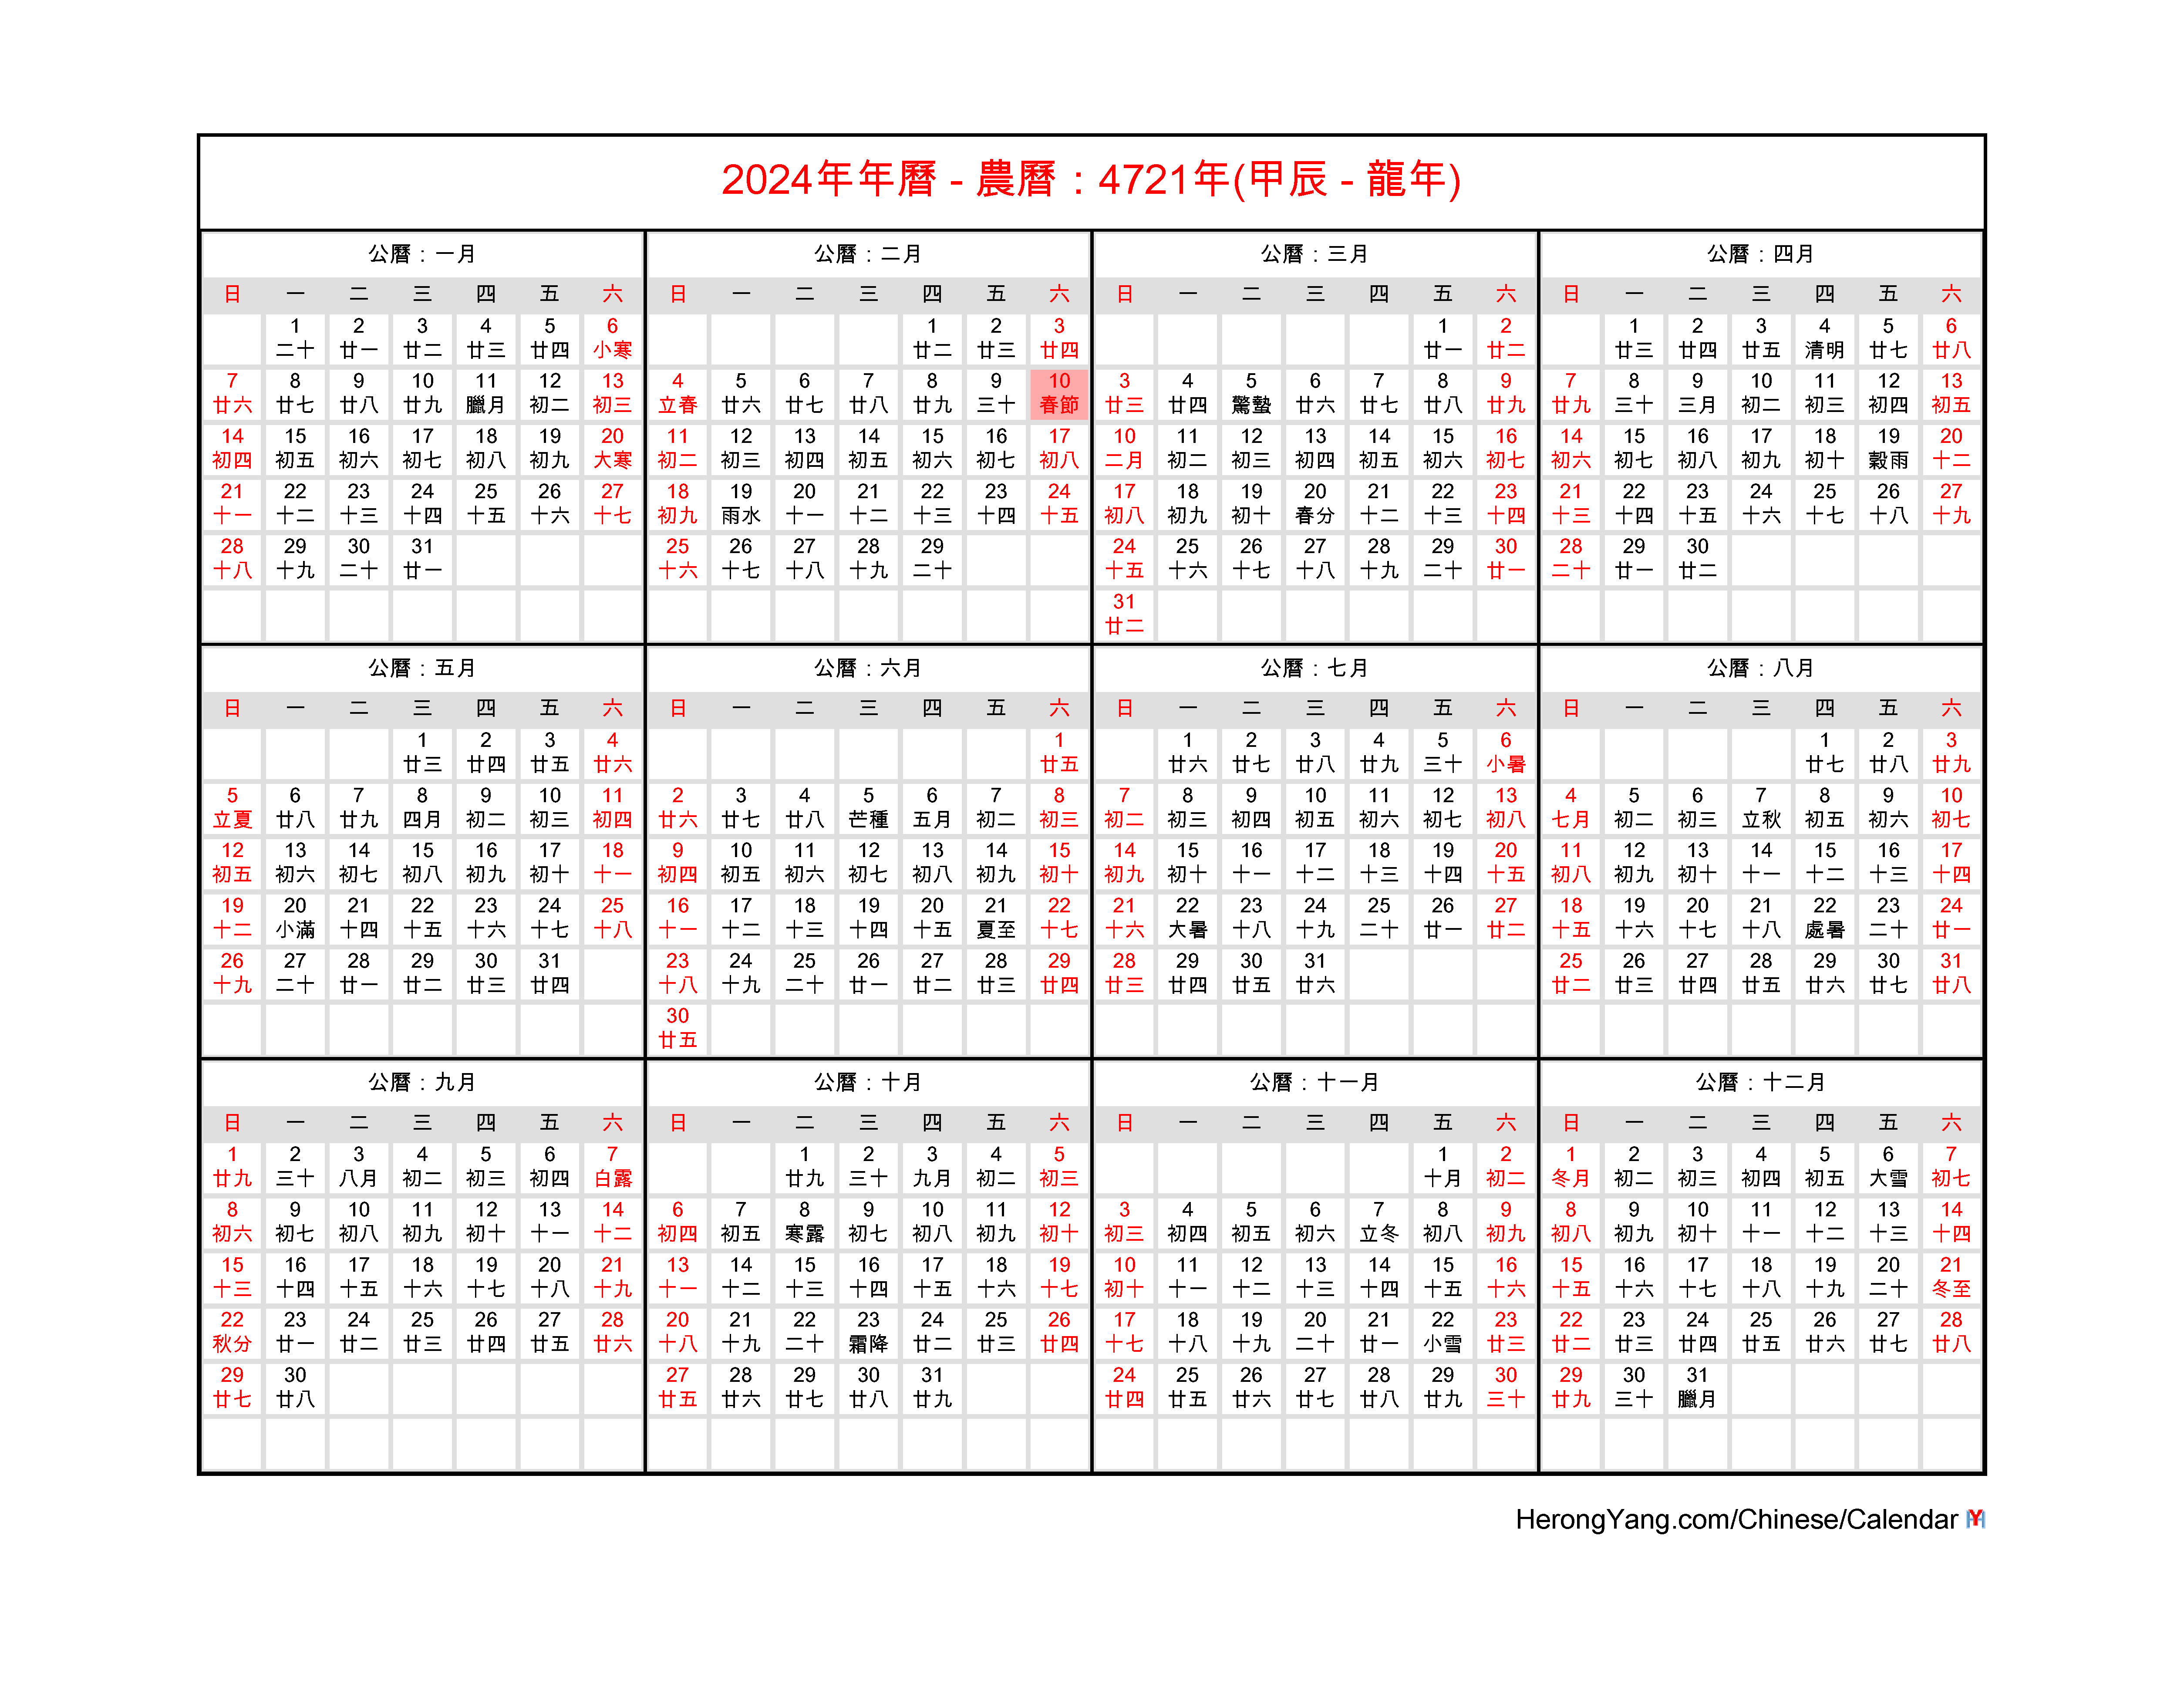 2024 Chinese Dragon Lunar Calendar Pictures Zita Angelle